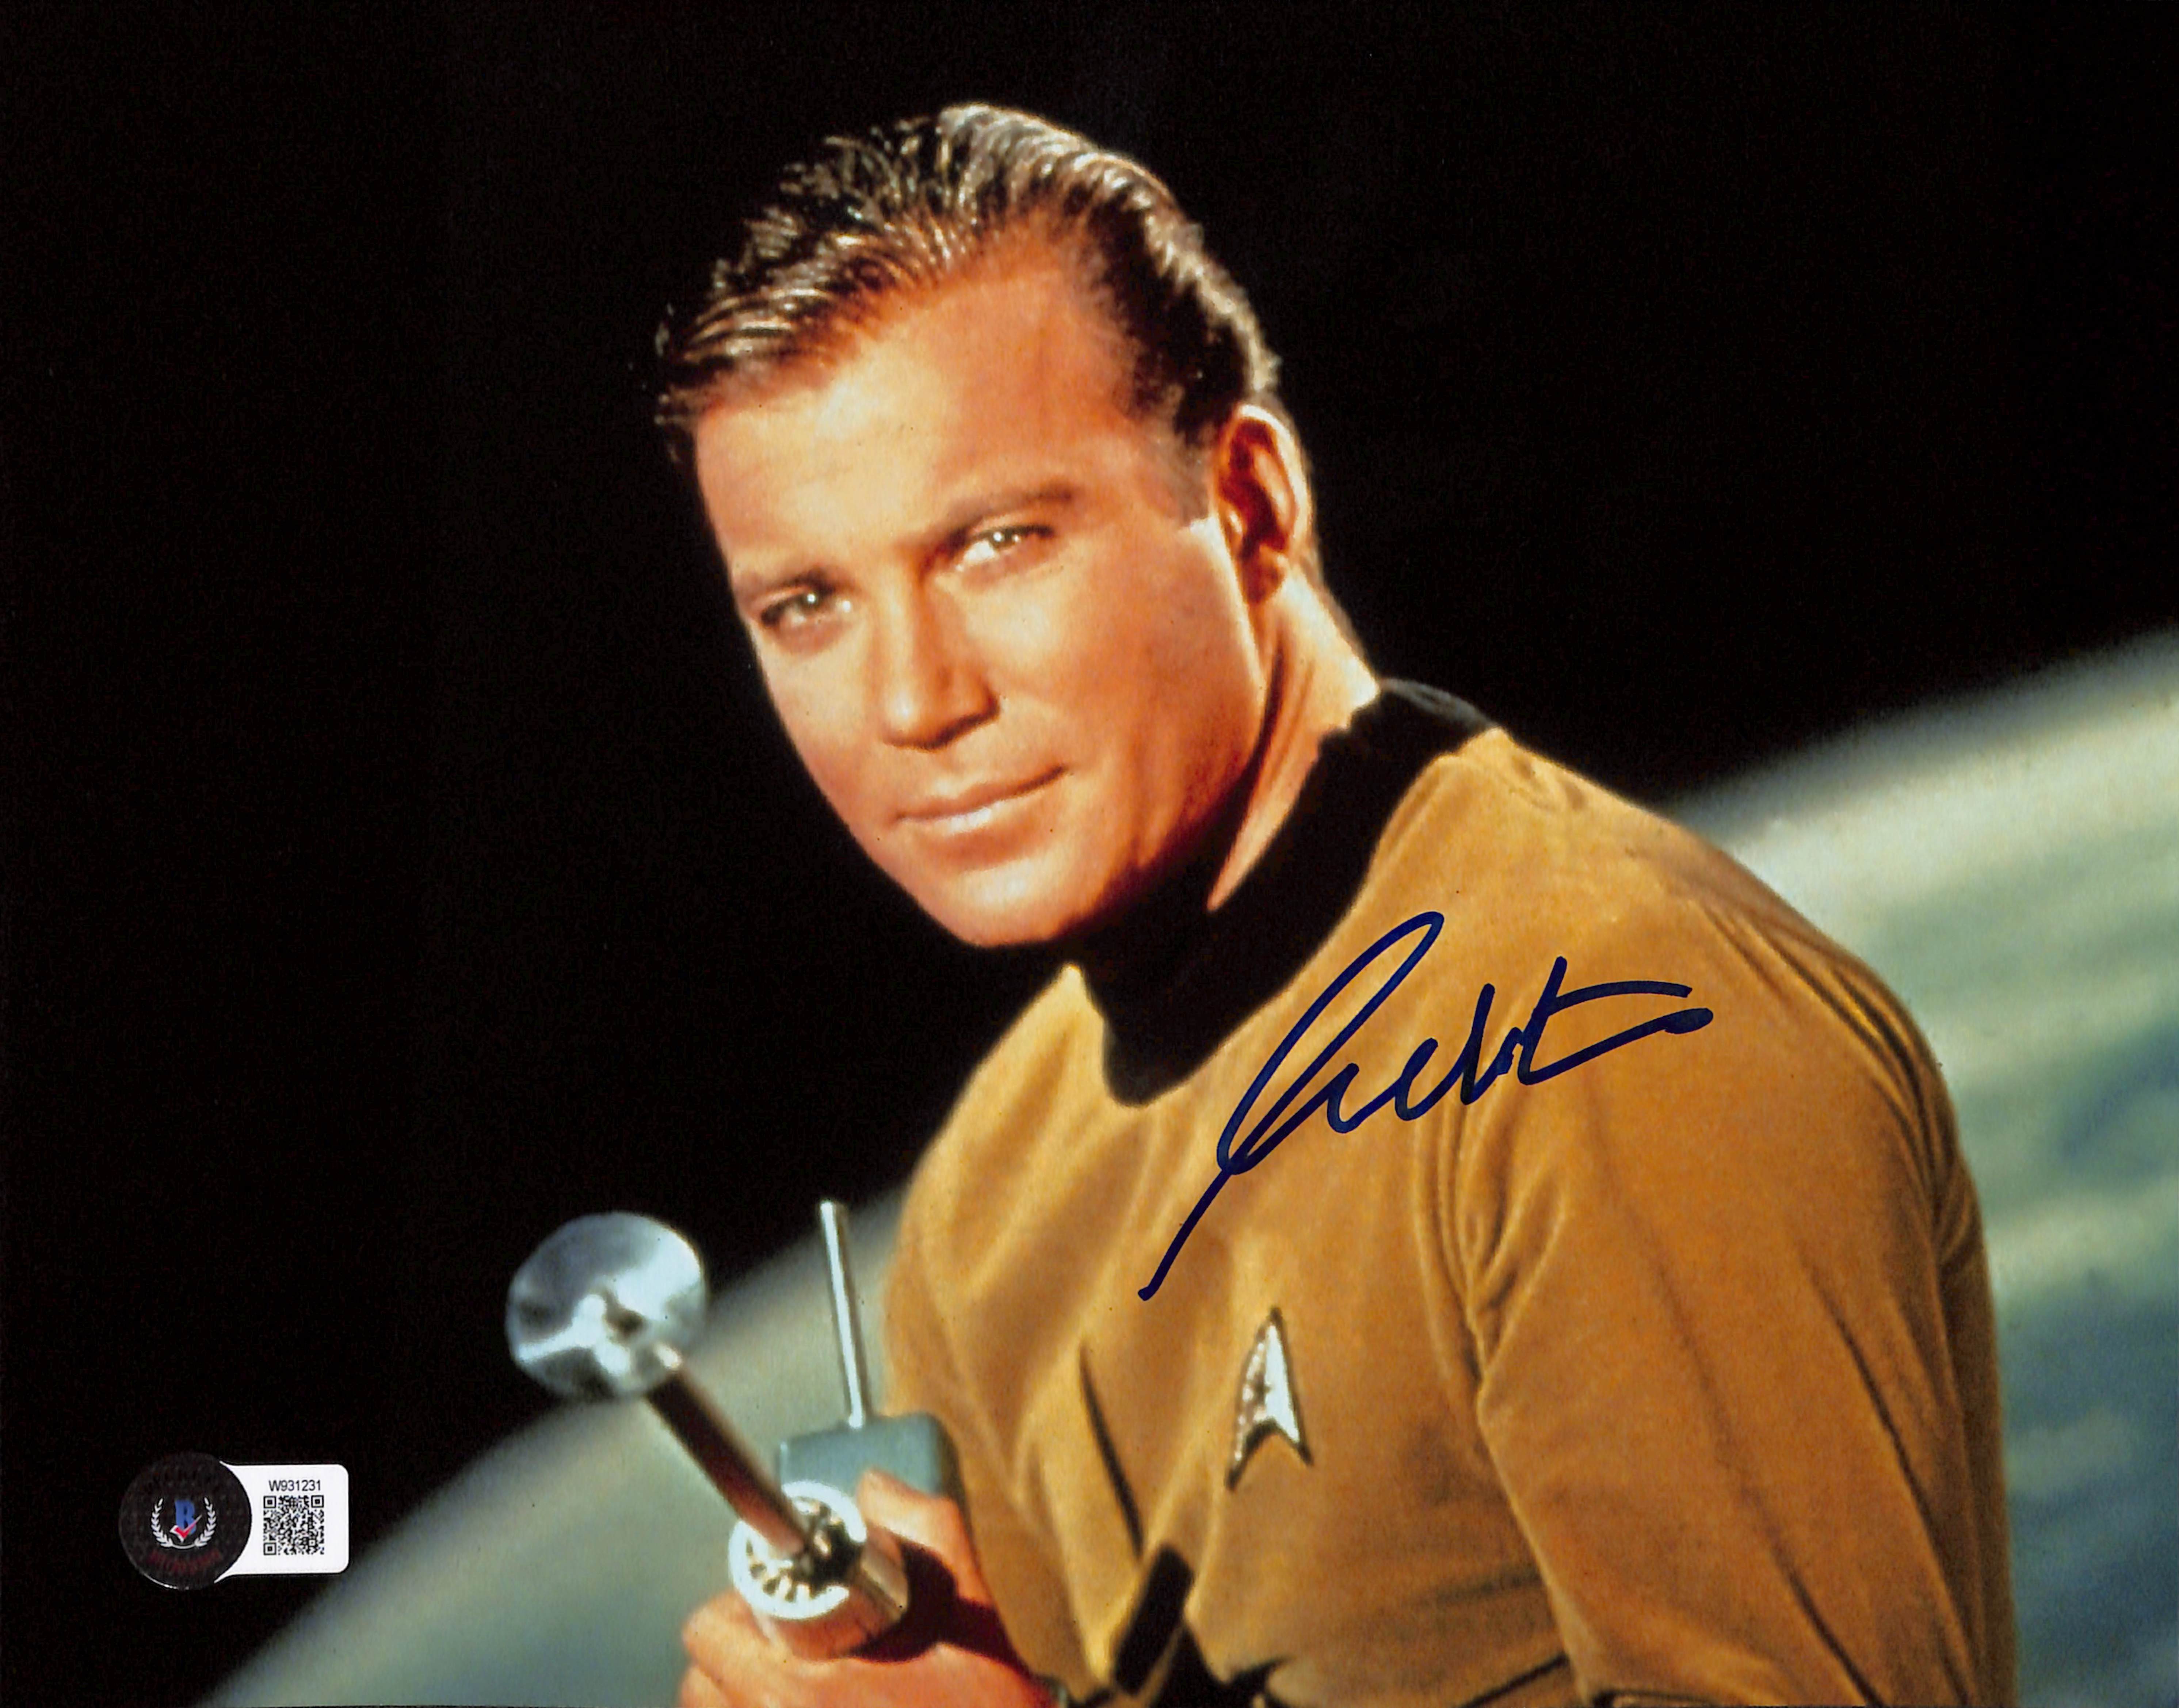 William Shatner Signed Star Trek 8x10 Photo Beckett 44533